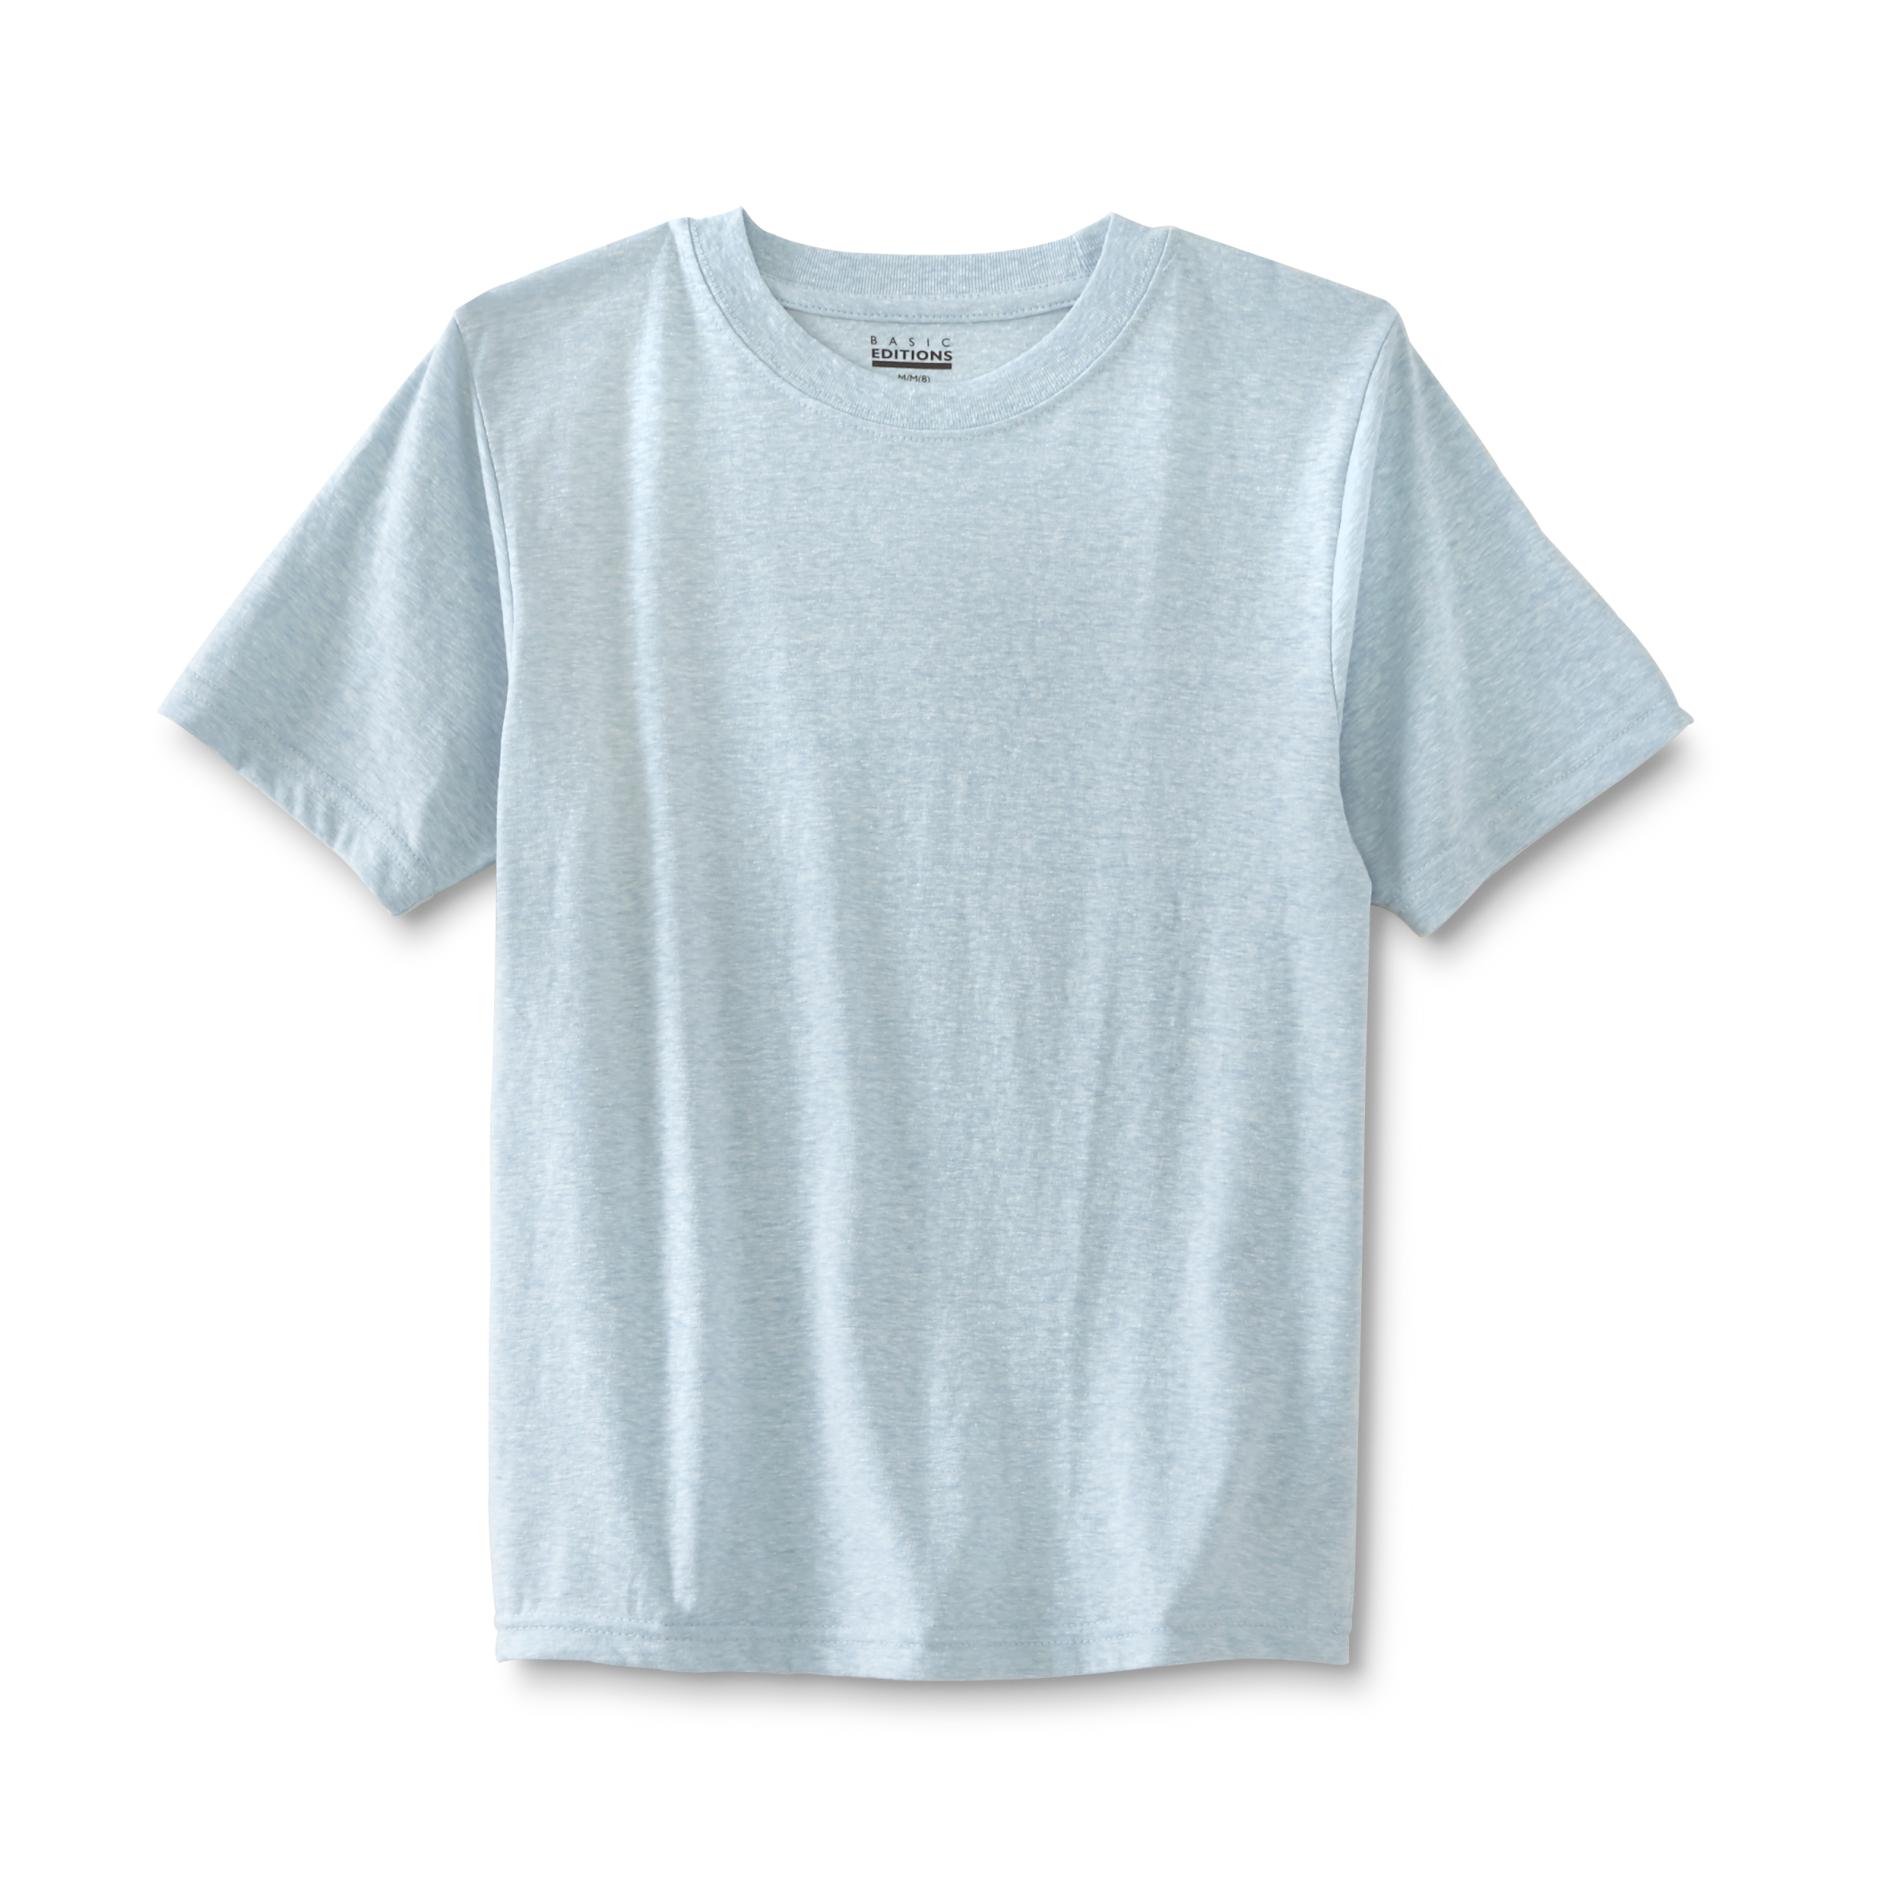 Basic Editions Boys' T-Shirt